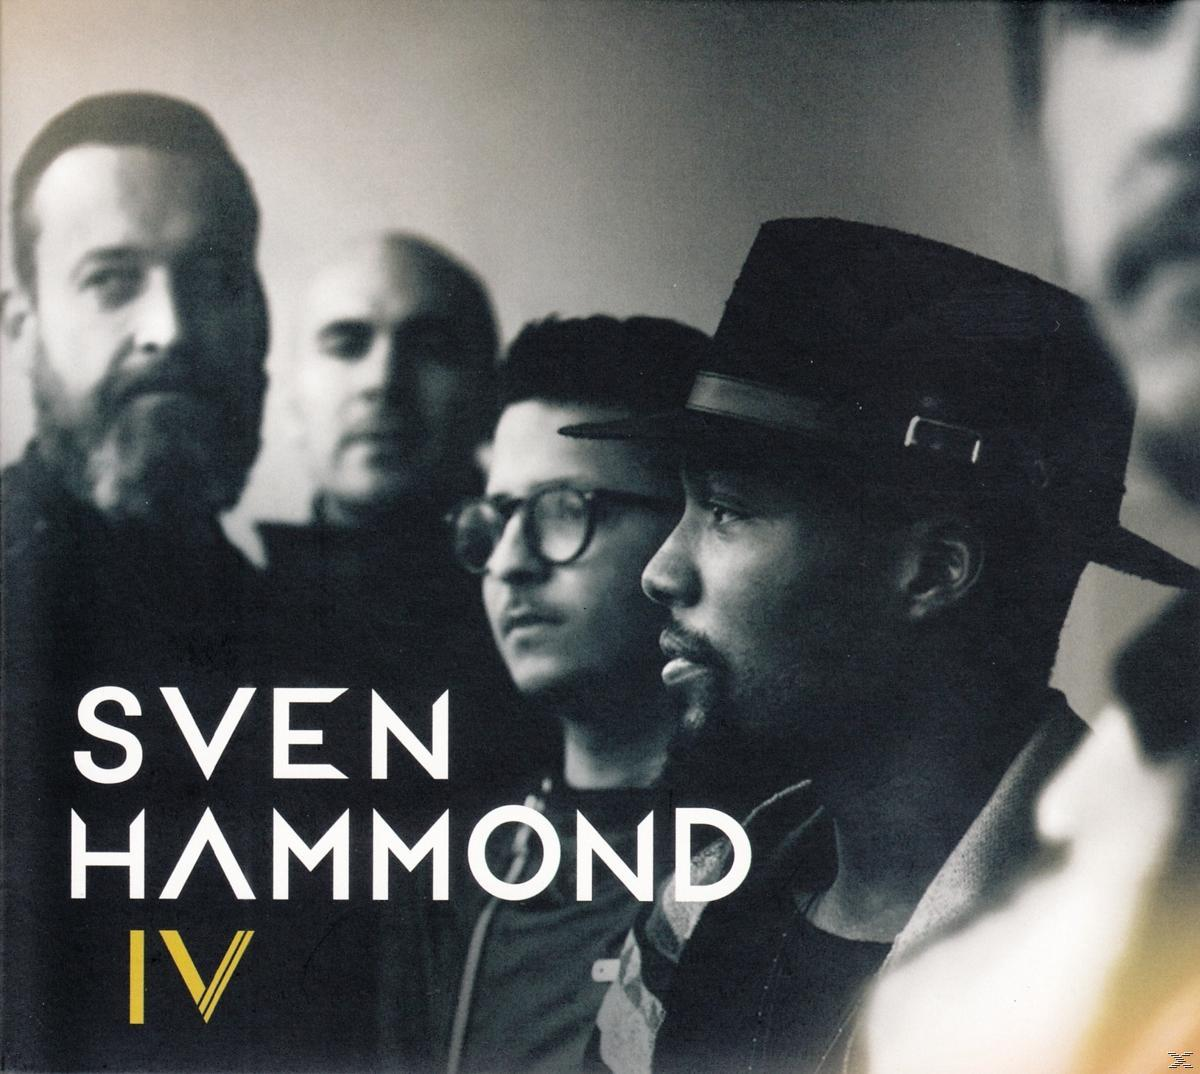 (CD) Hammond IV - Sven -